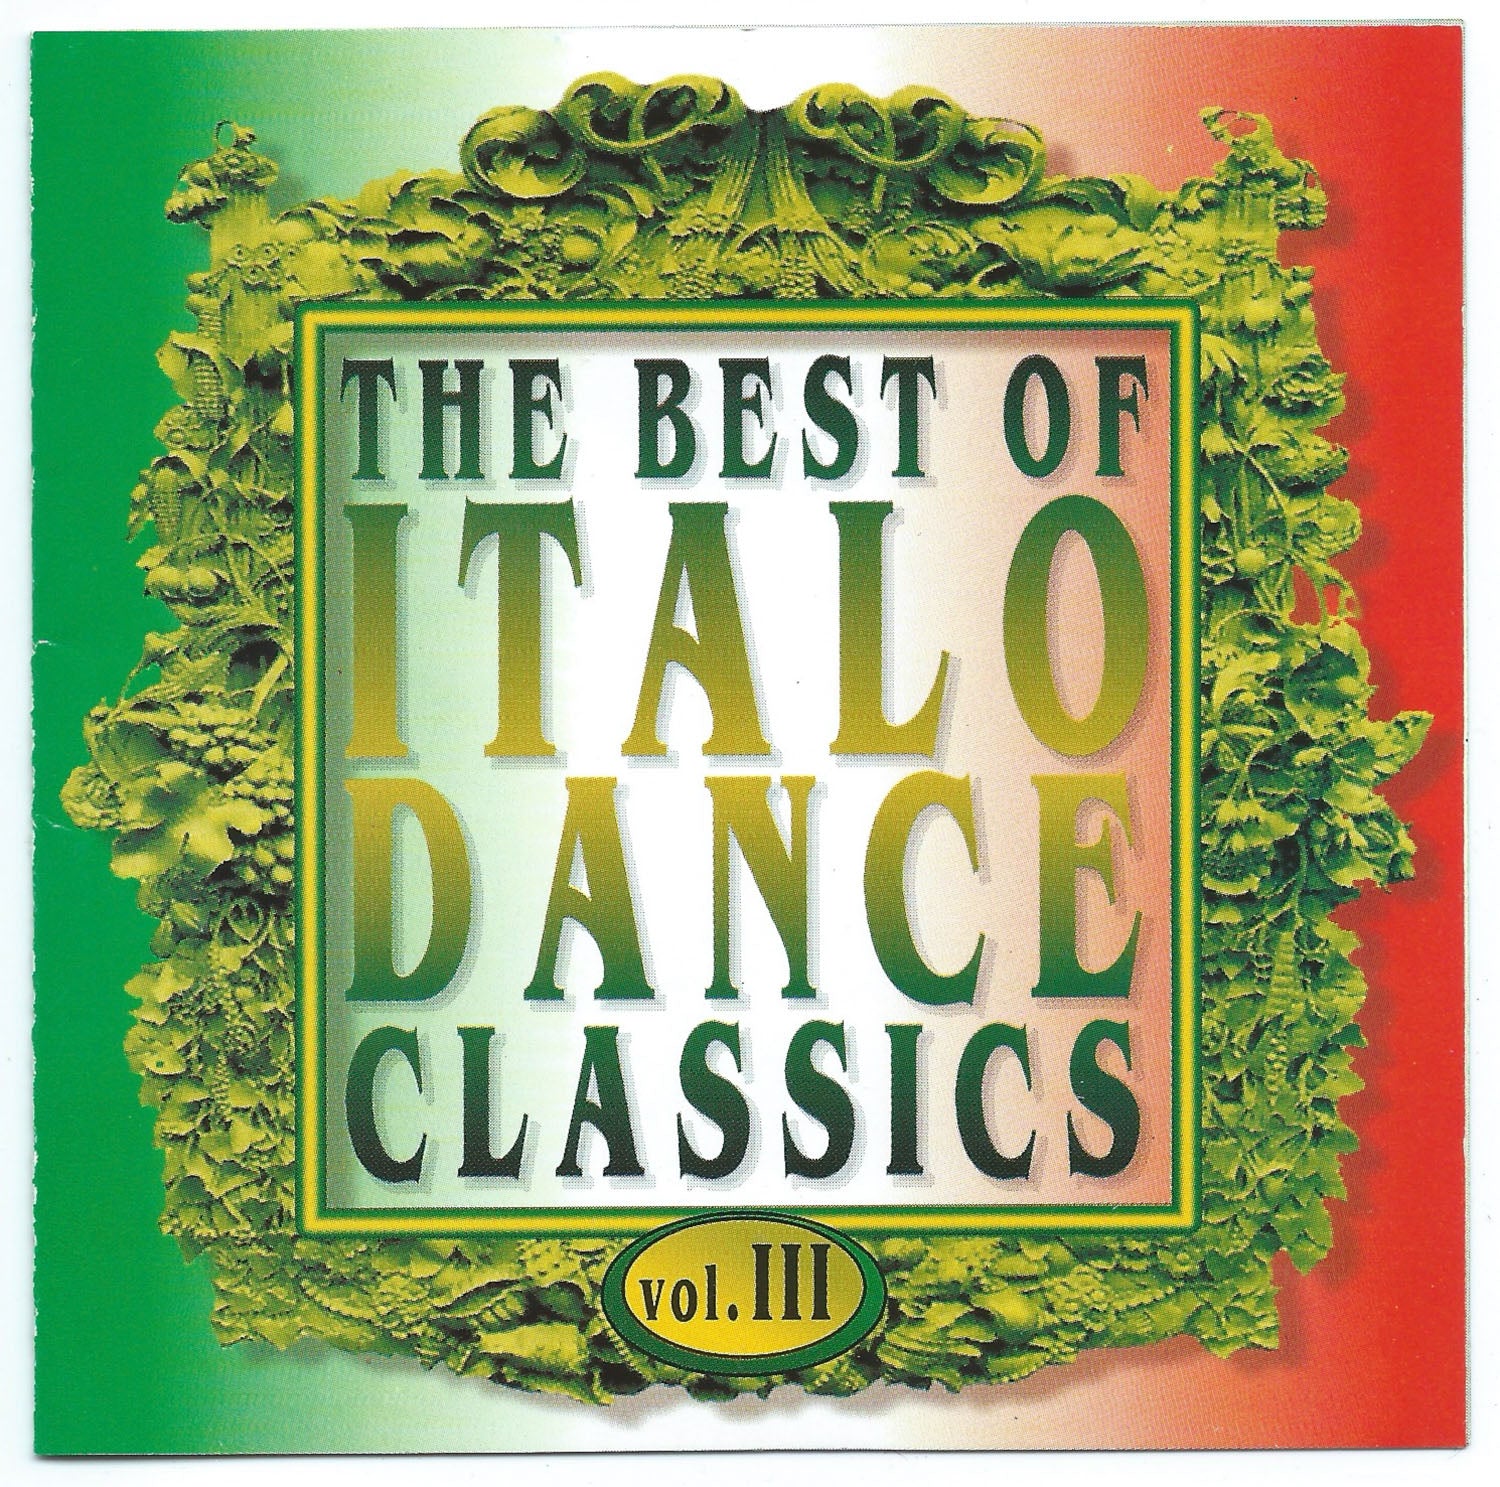 The Best of Italo Dance Classics vol III